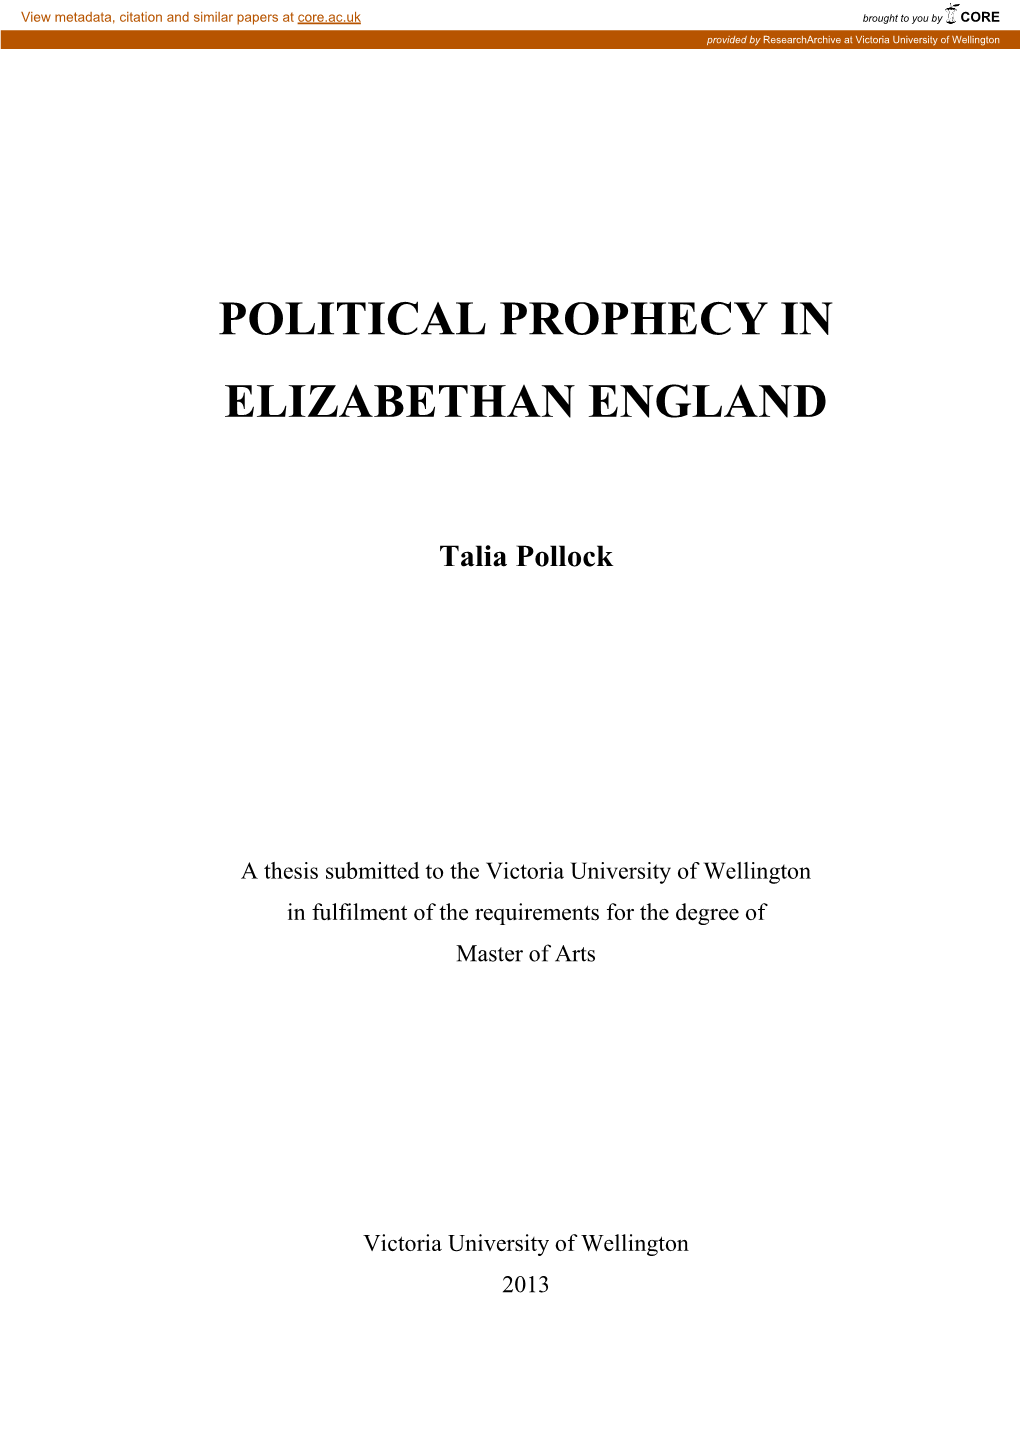 Political Prophecy in Elizabethan England